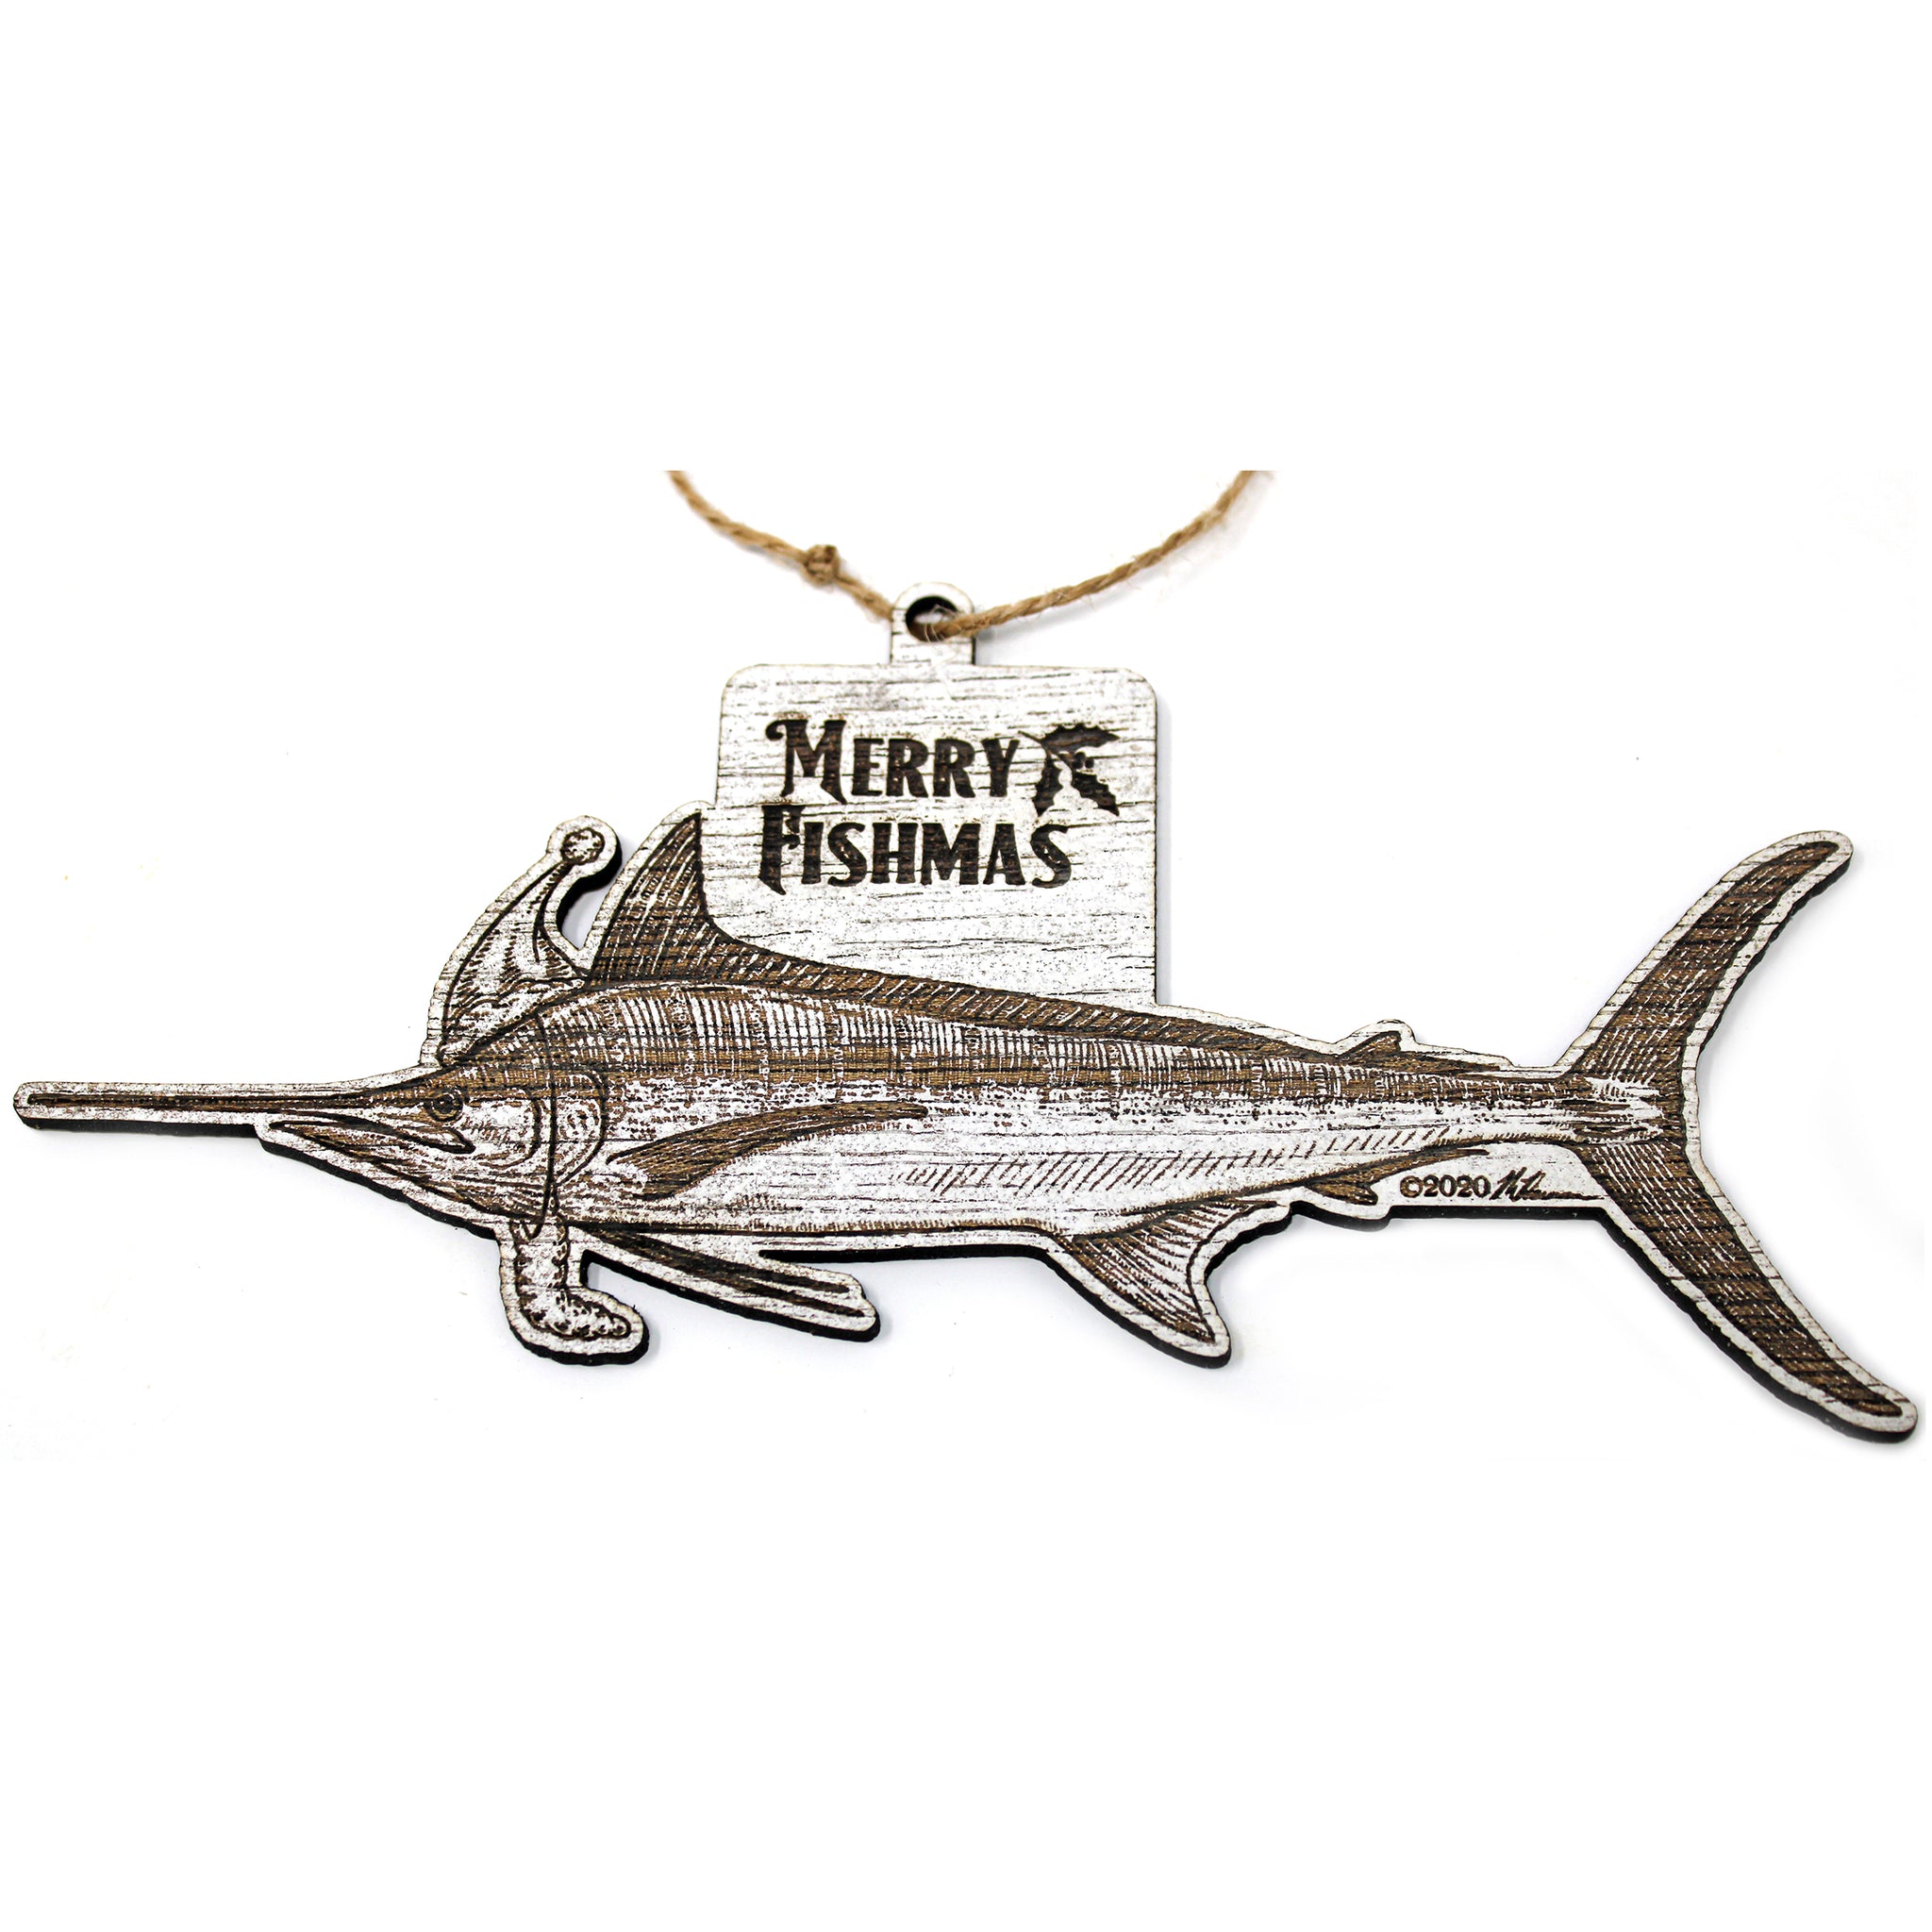 Wood Christmas Ornaments - Offshore Slam Fishmas Ornaments